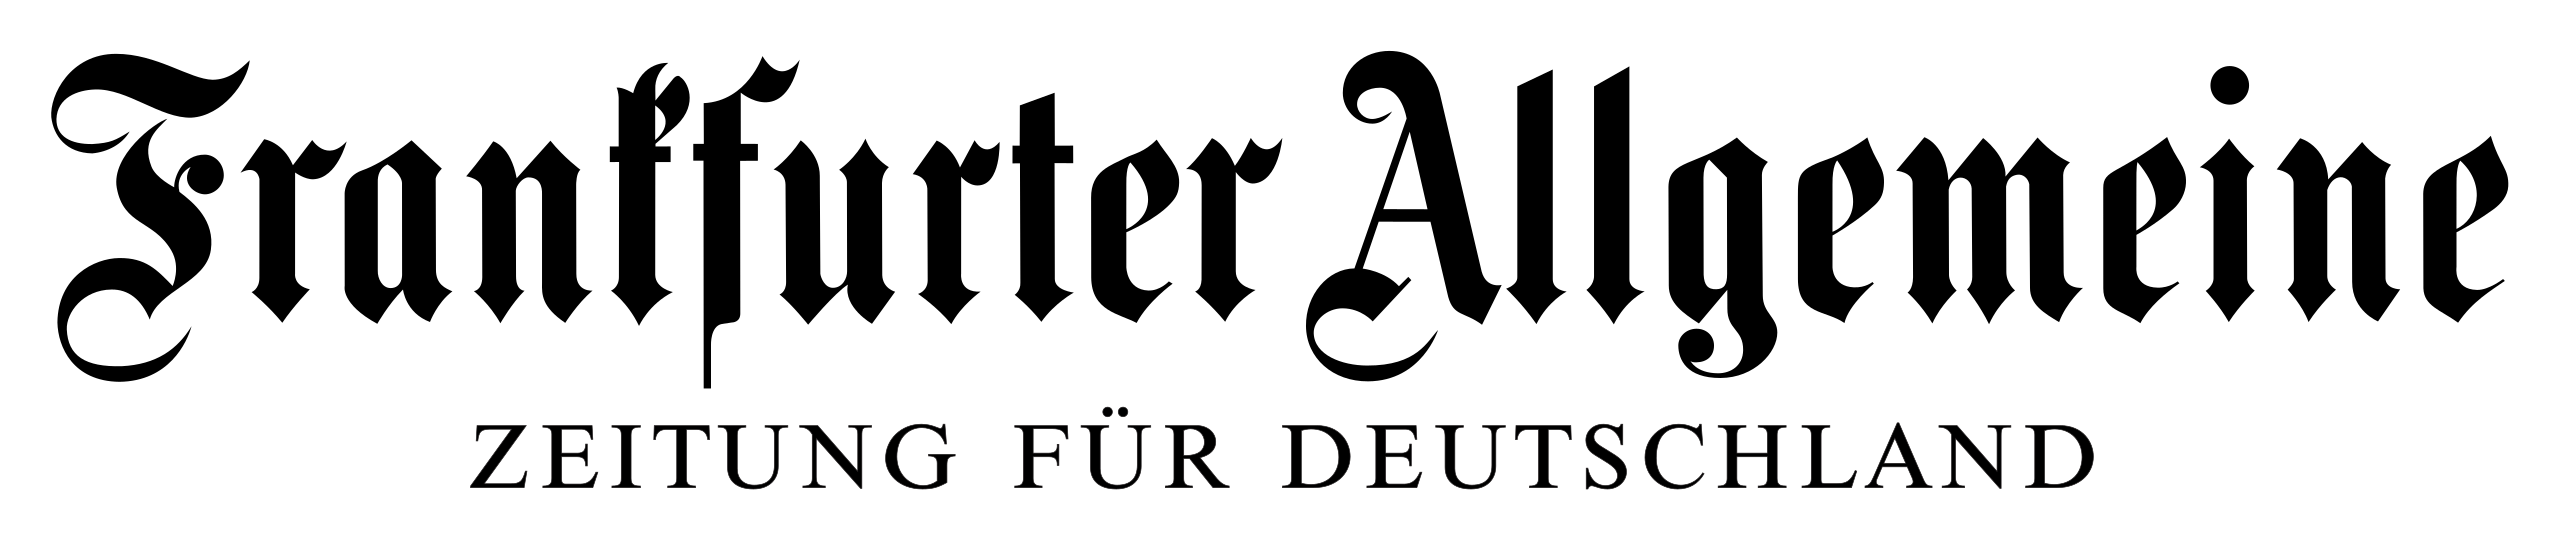 Frankfurter_Allgemeine_logo.svg